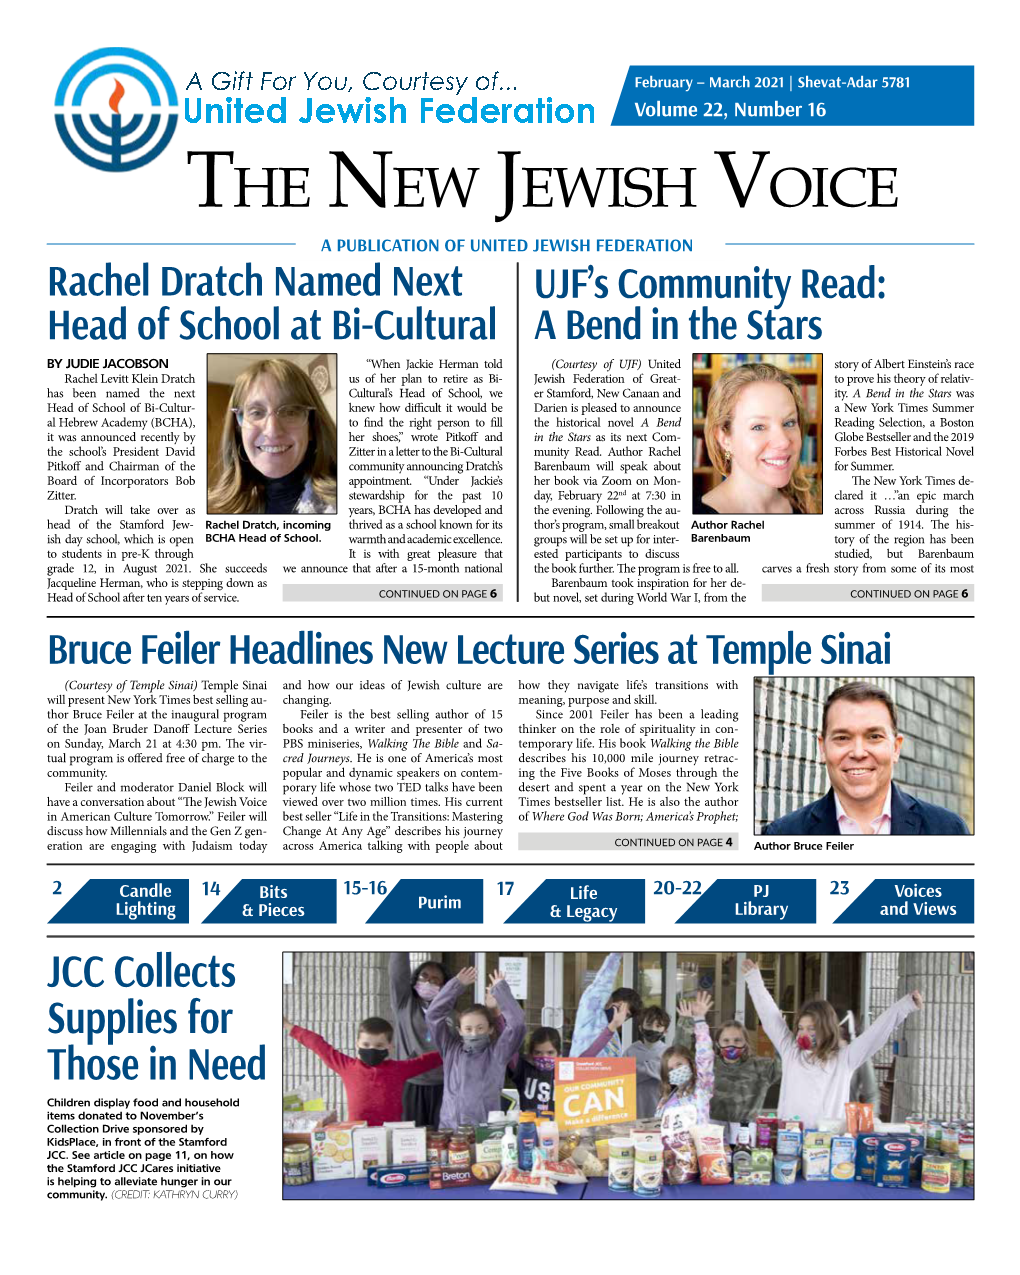 The New Jewish Voice